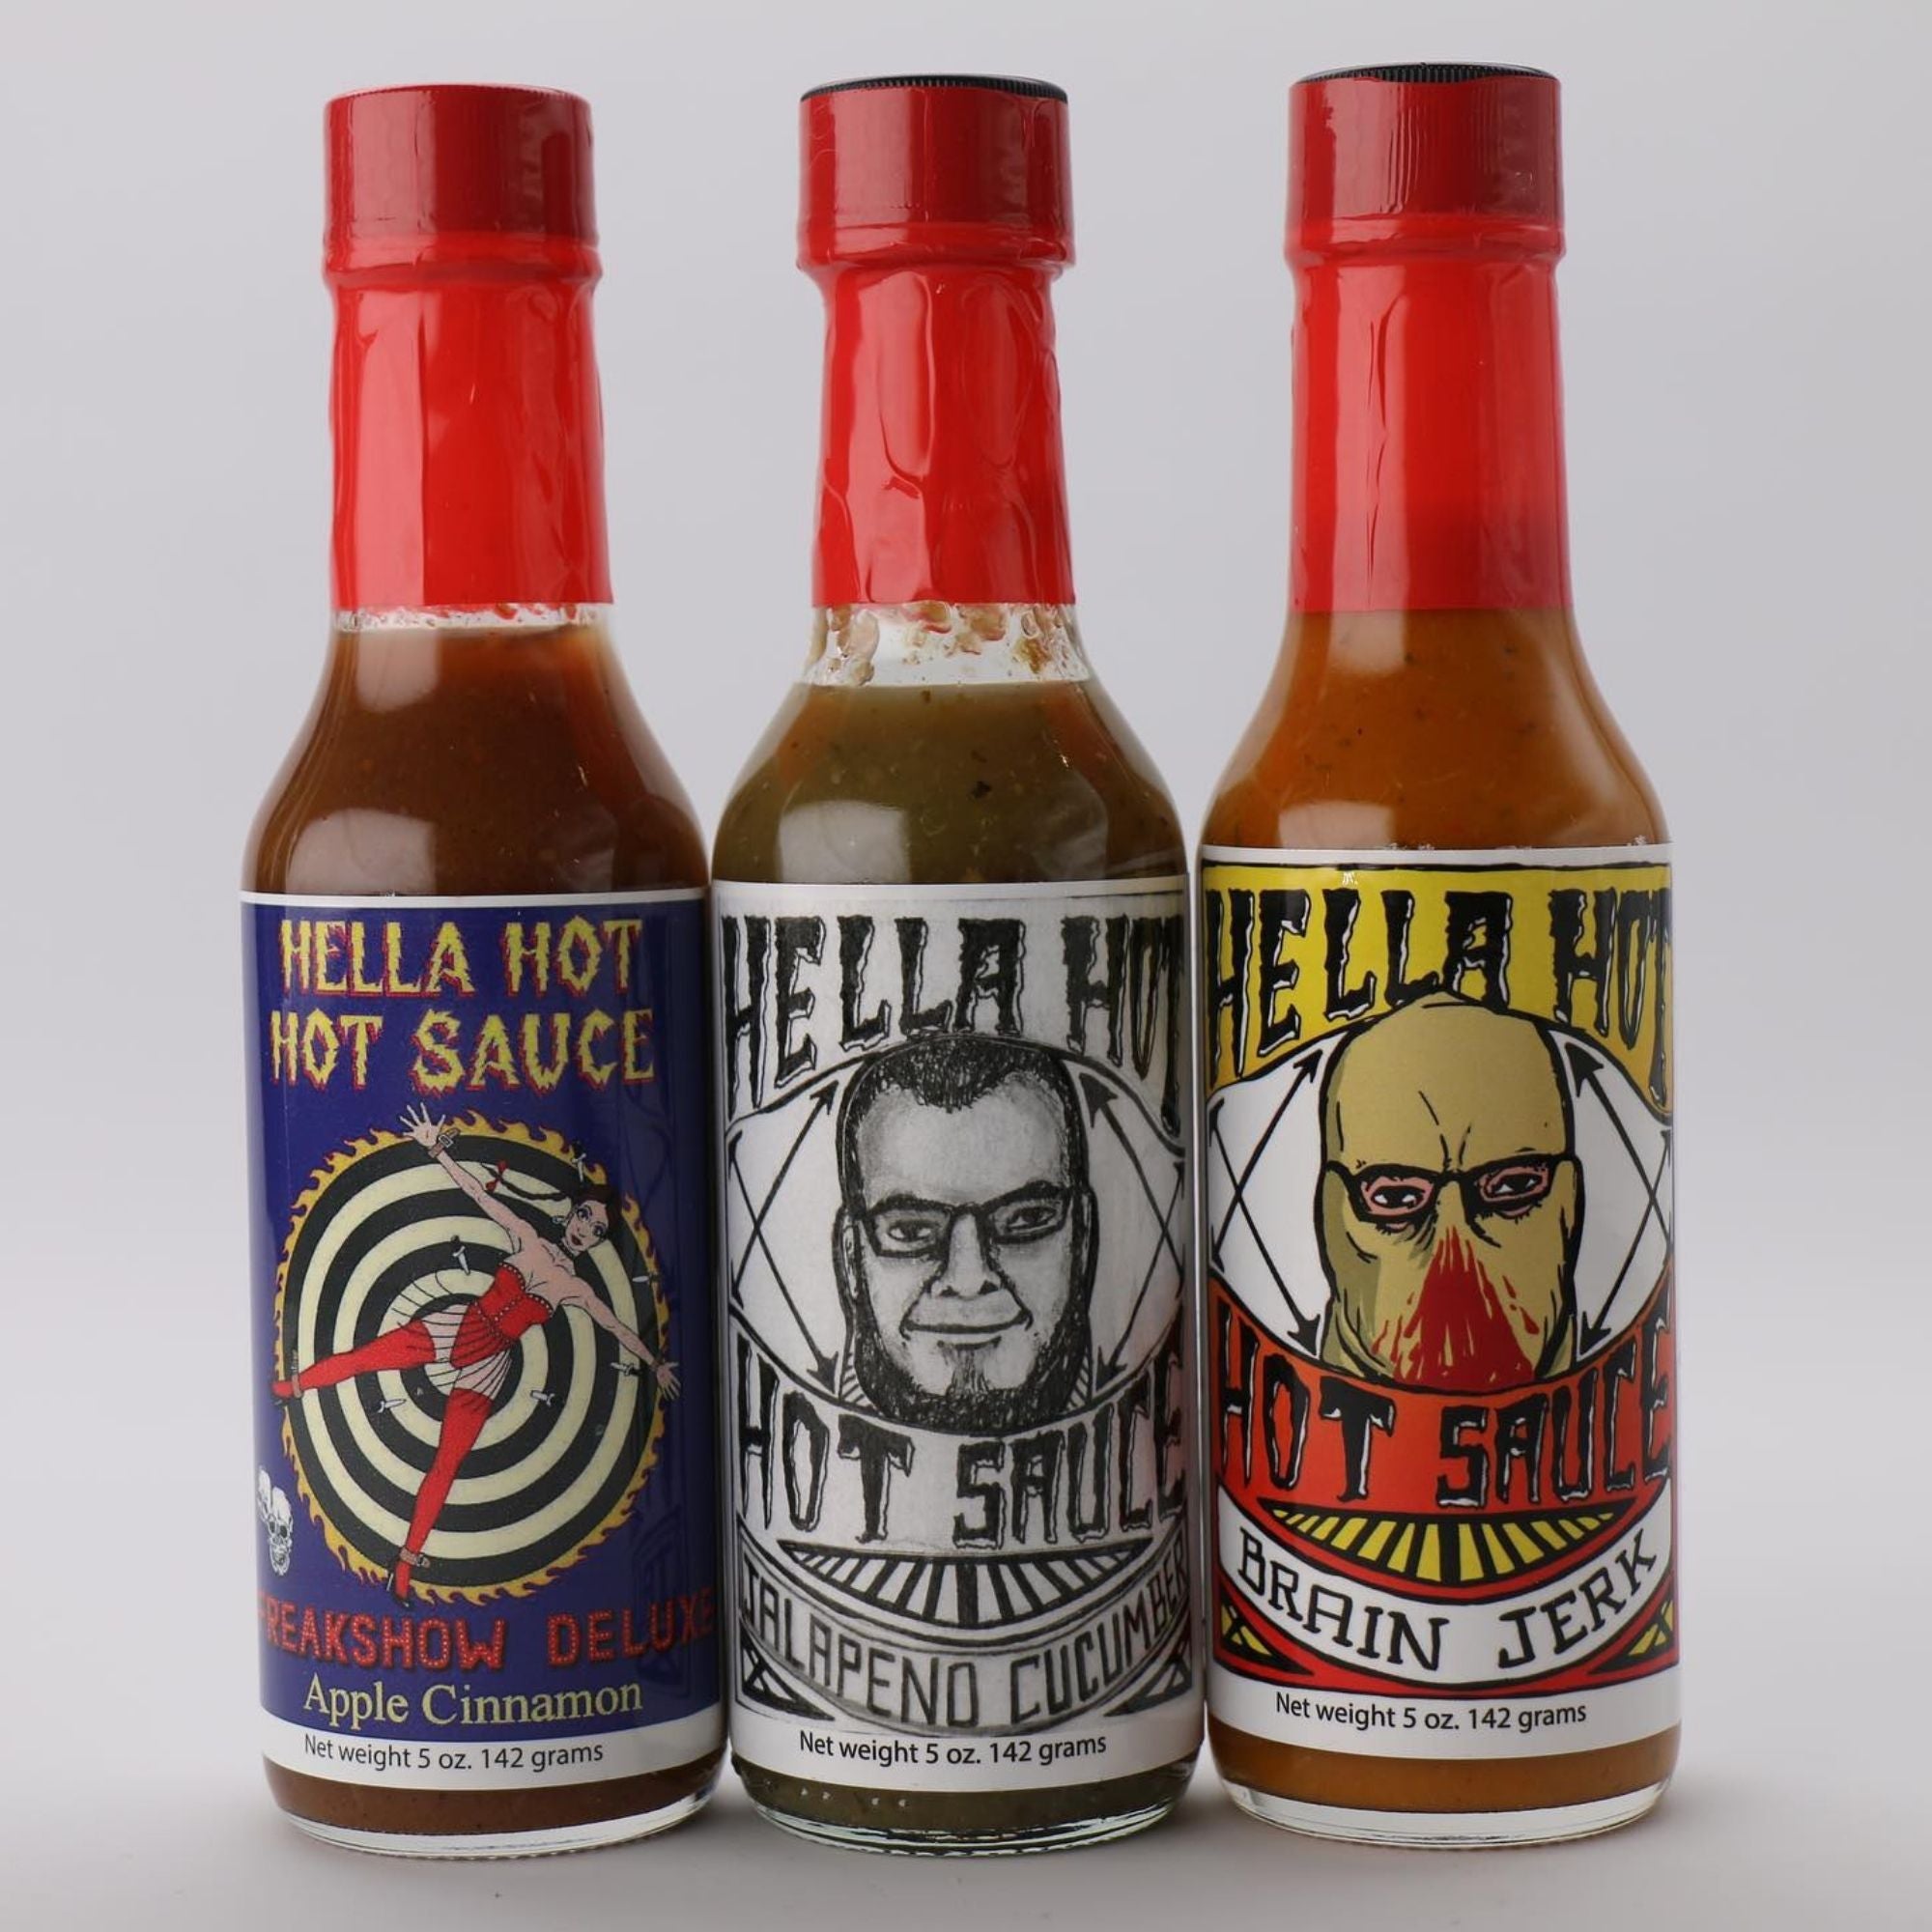 hella hot hot sauce story